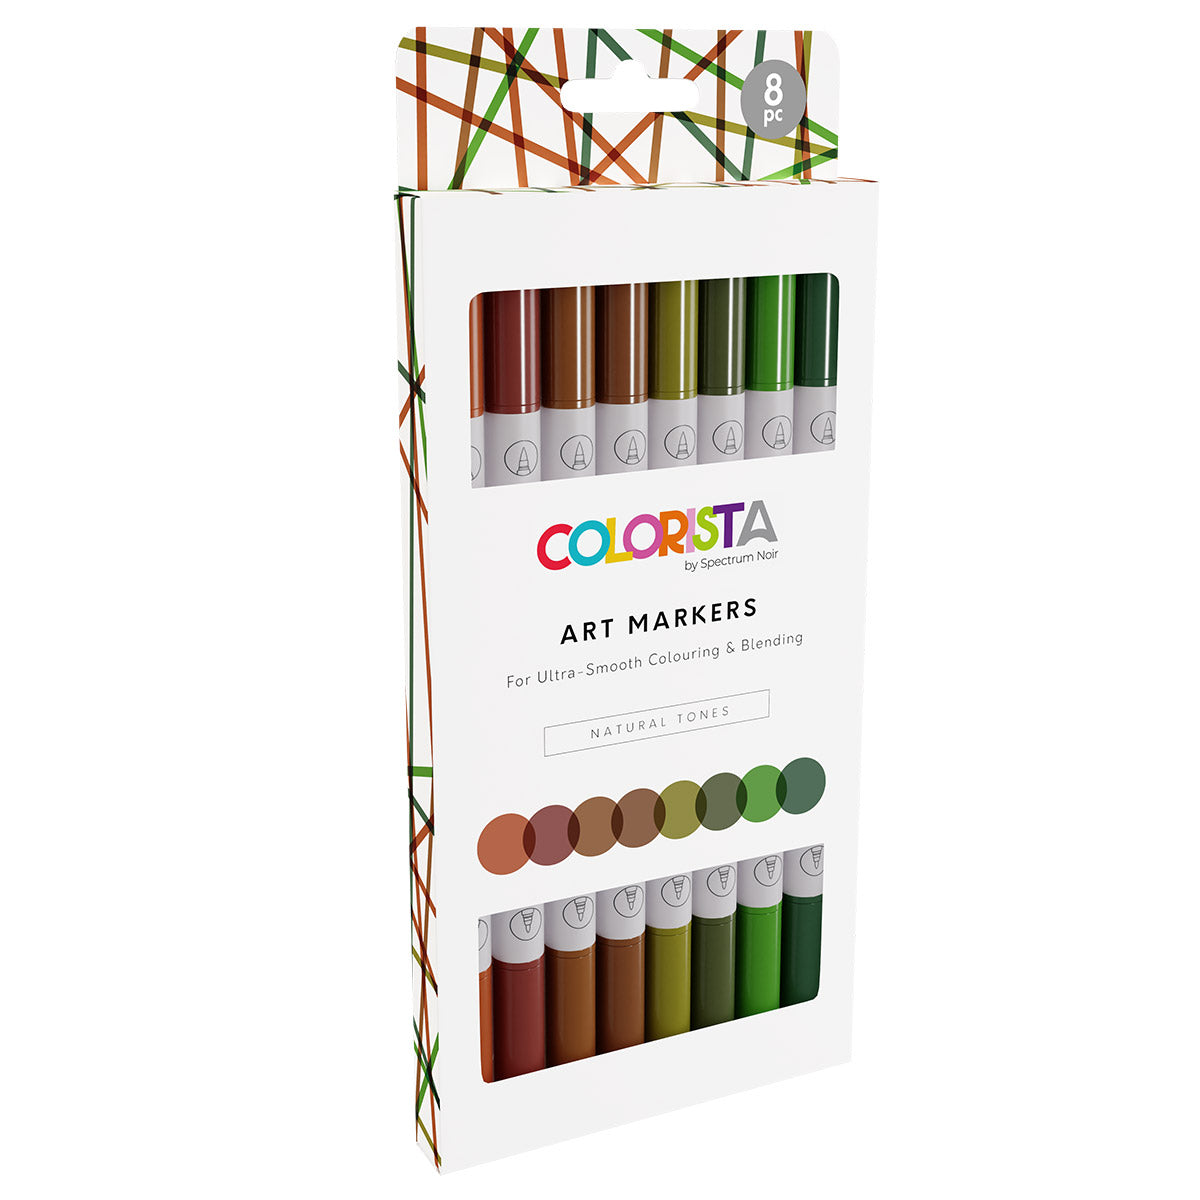 Spectrum Noir Colorista - Art Markers - Dual-tip Alcohol Brush Markers (8 set) - Natural tones